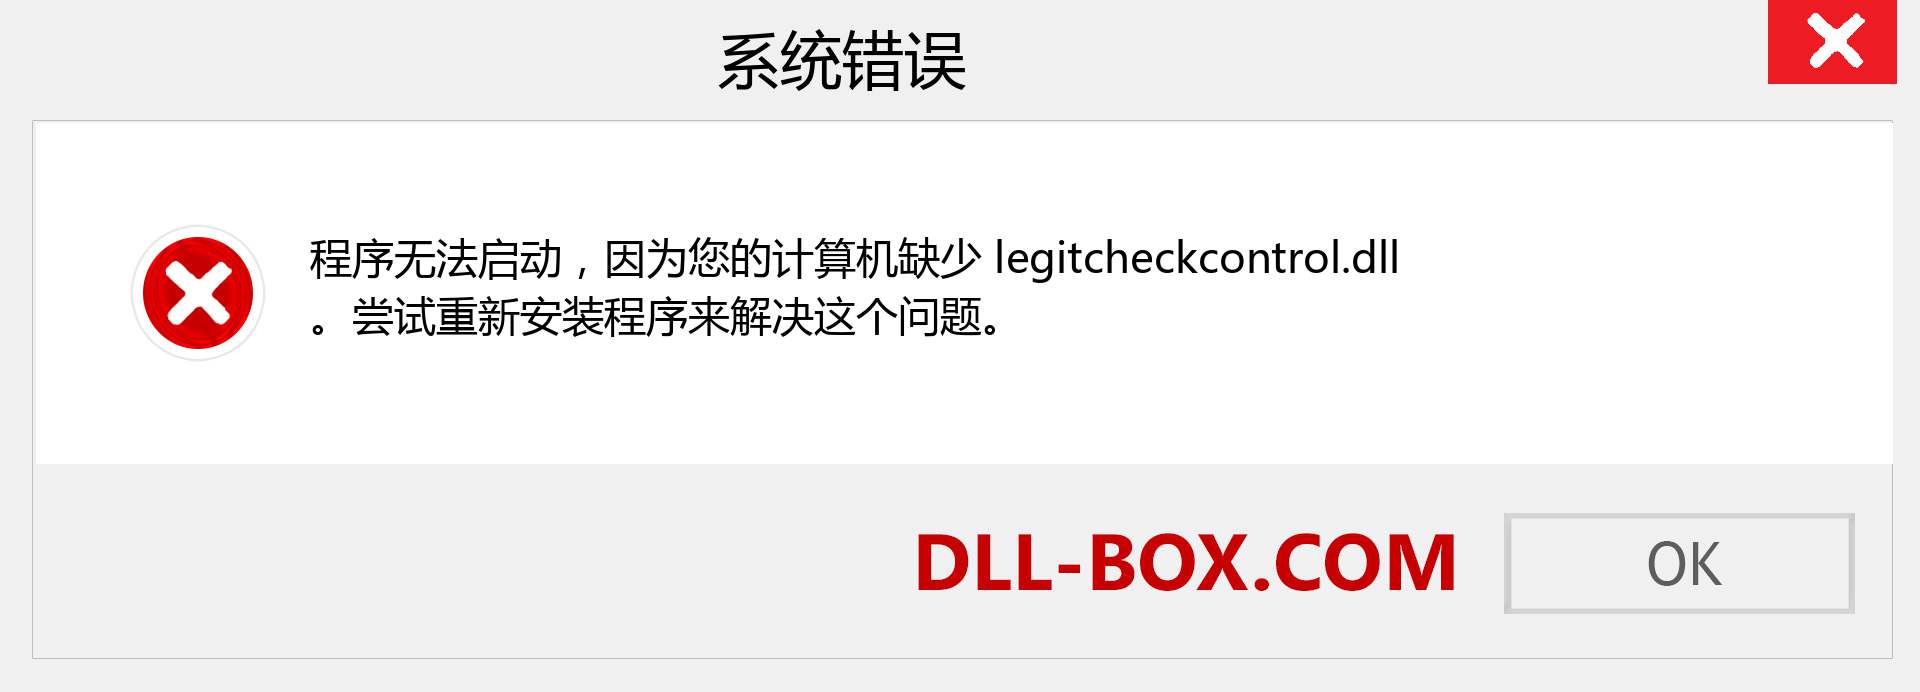 legitcheckcontrol.dll 文件丢失？。 适用于 Windows 7、8、10 的下载 - 修复 Windows、照片、图像上的 legitcheckcontrol dll 丢失错误